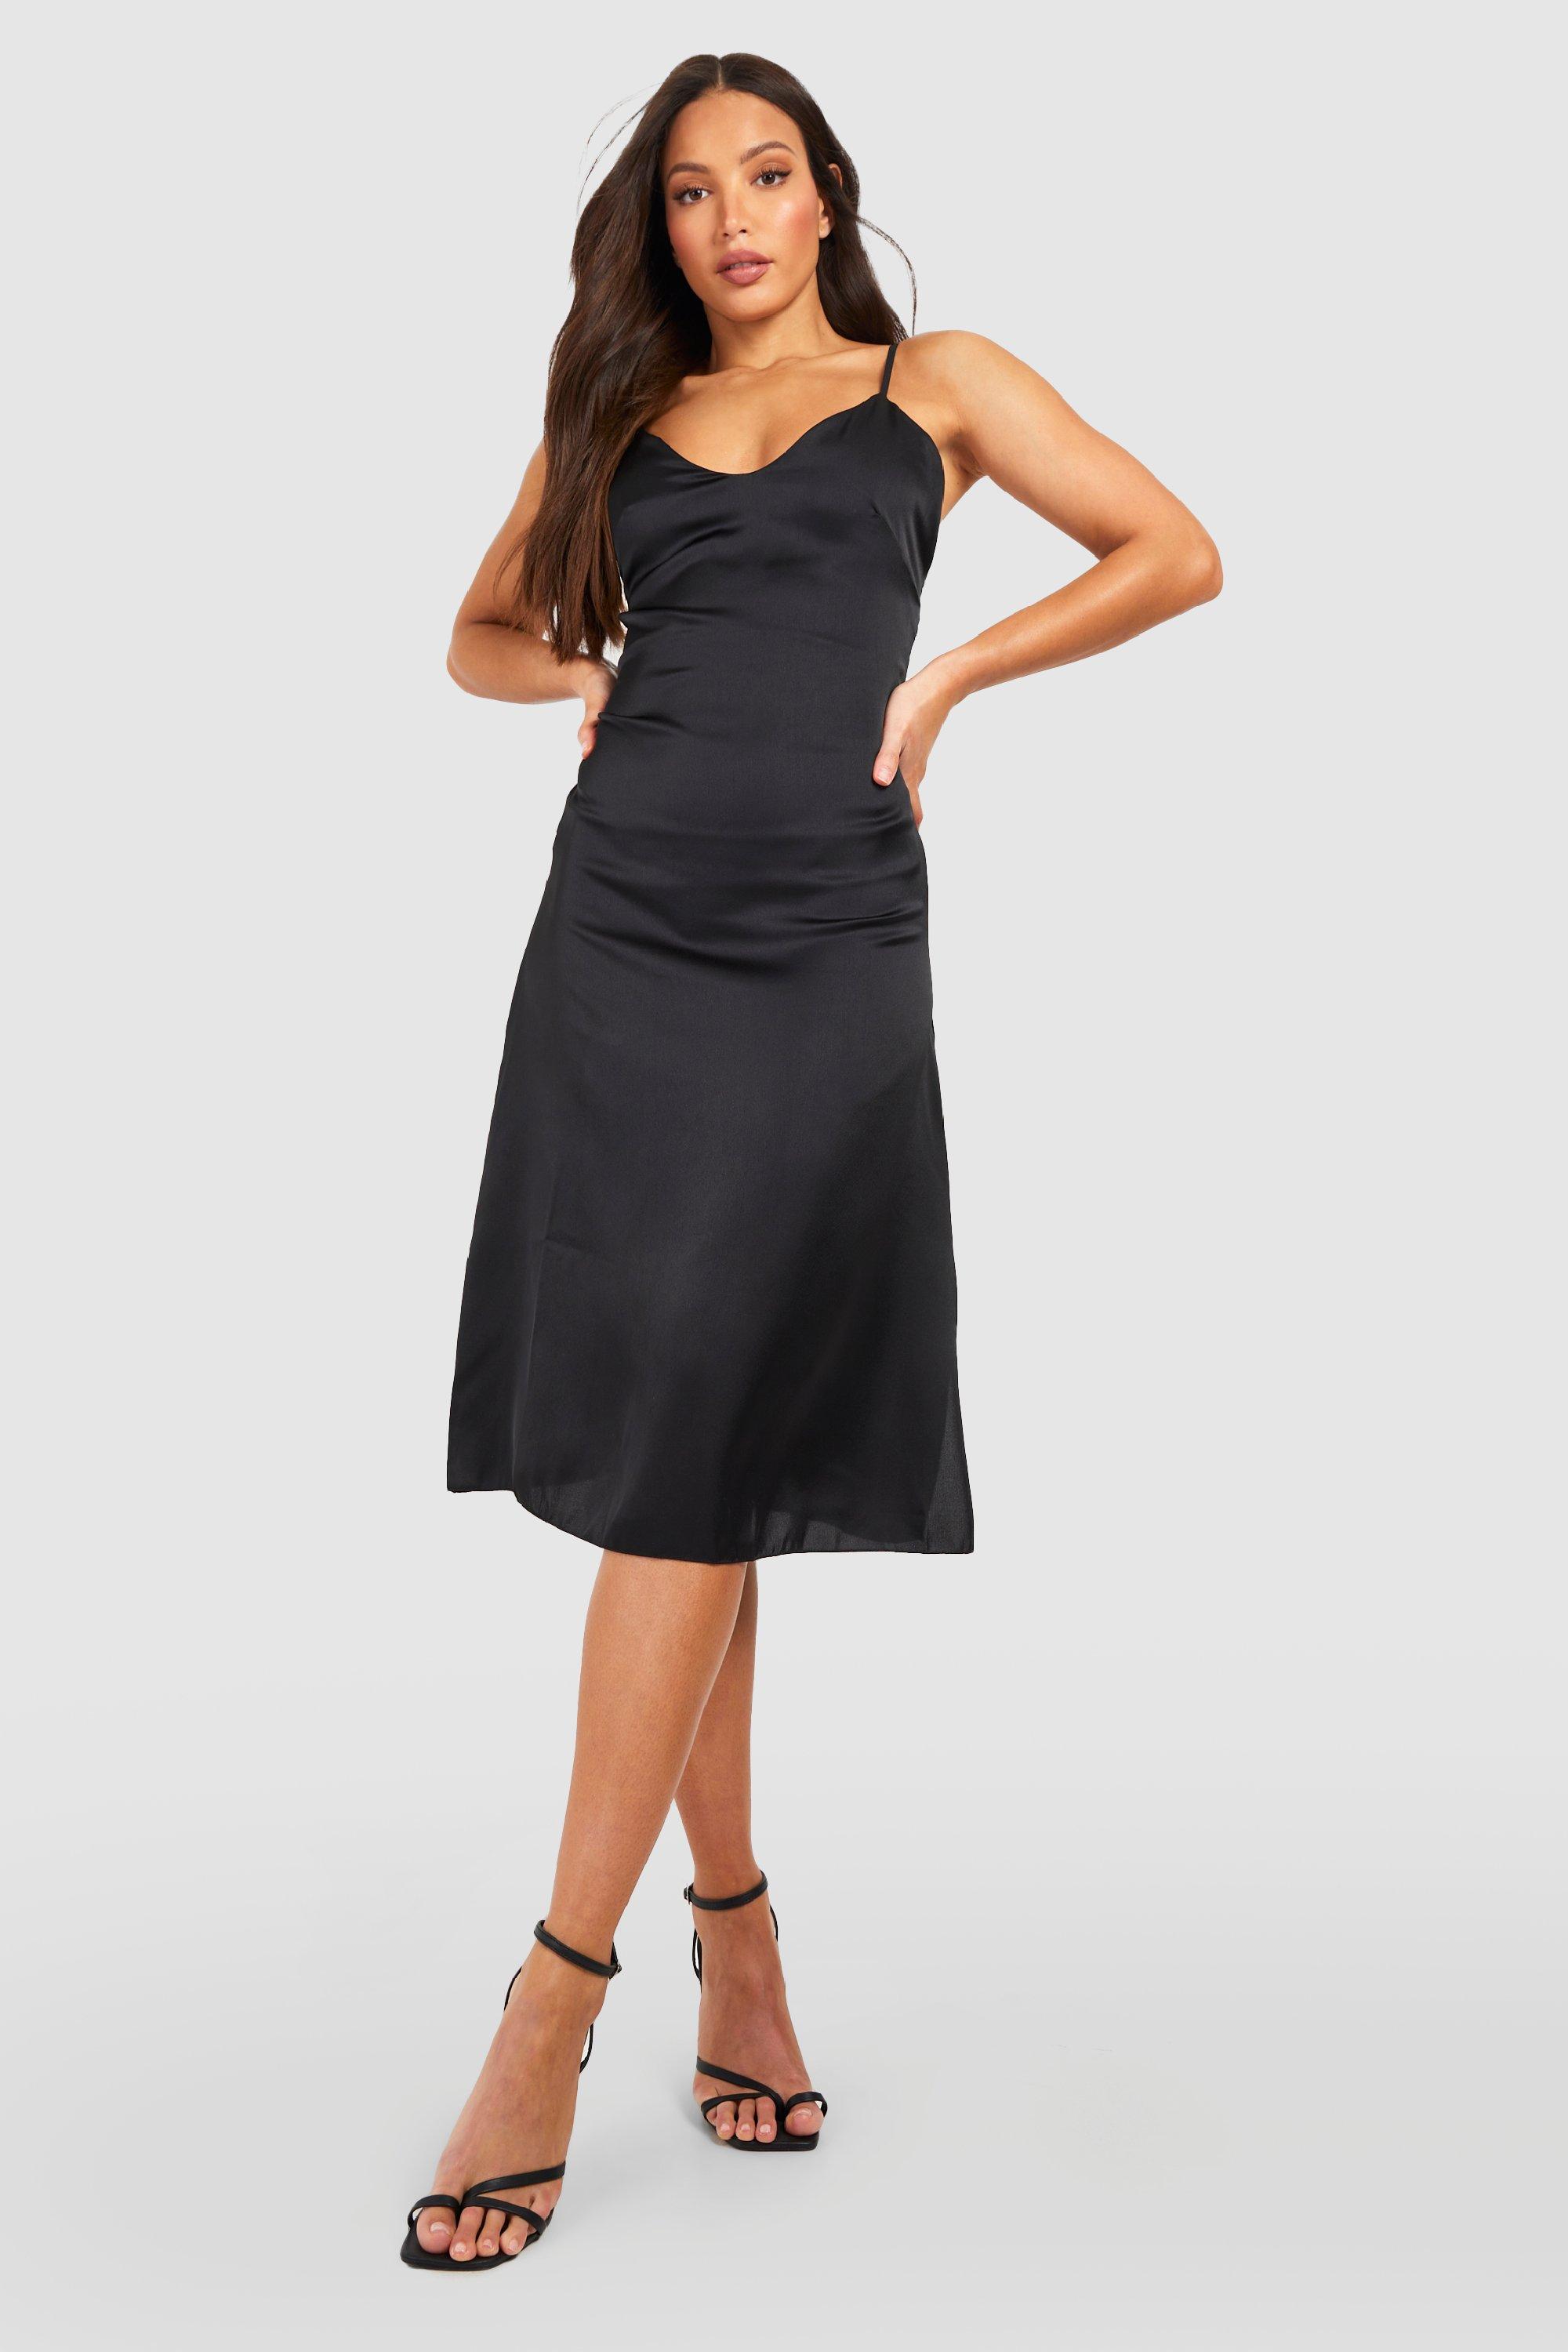 https://media.boohoo.com/i/boohoo/tzz96205_black_xl_2/female-black-tall-satin-slip-dress